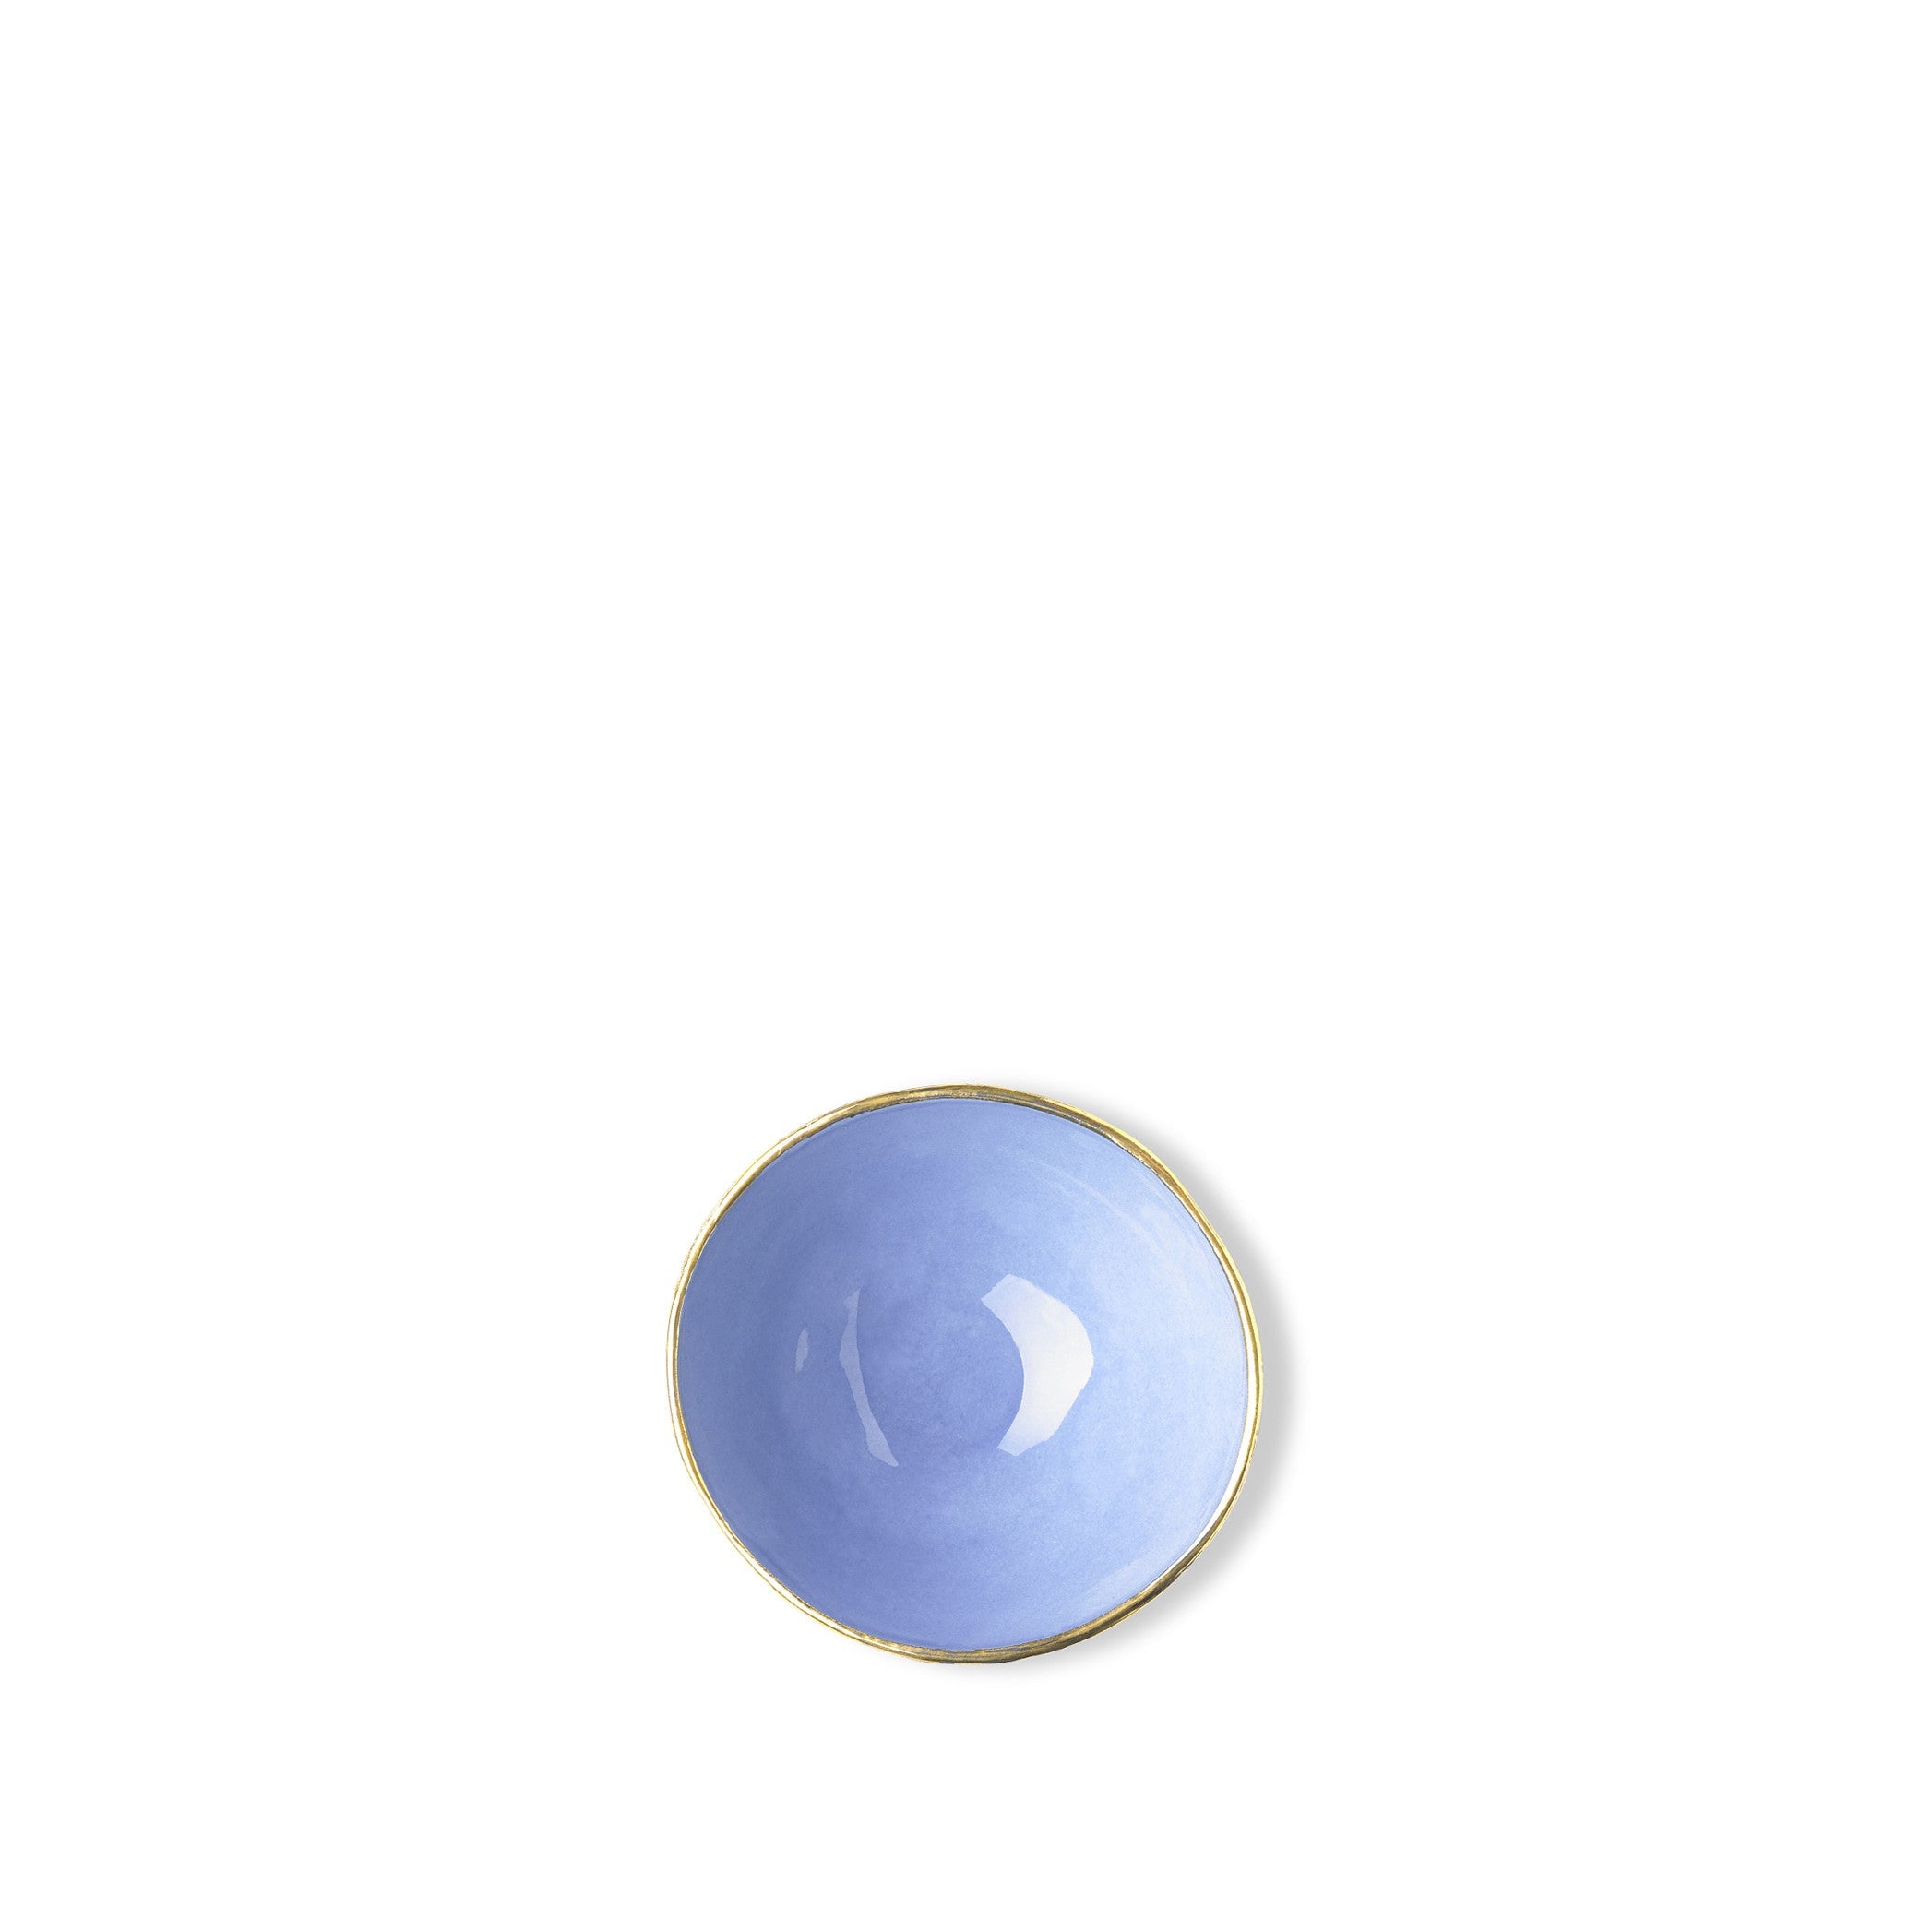 Small Blue Ceramic Bowl with Gold Rim, 6cm